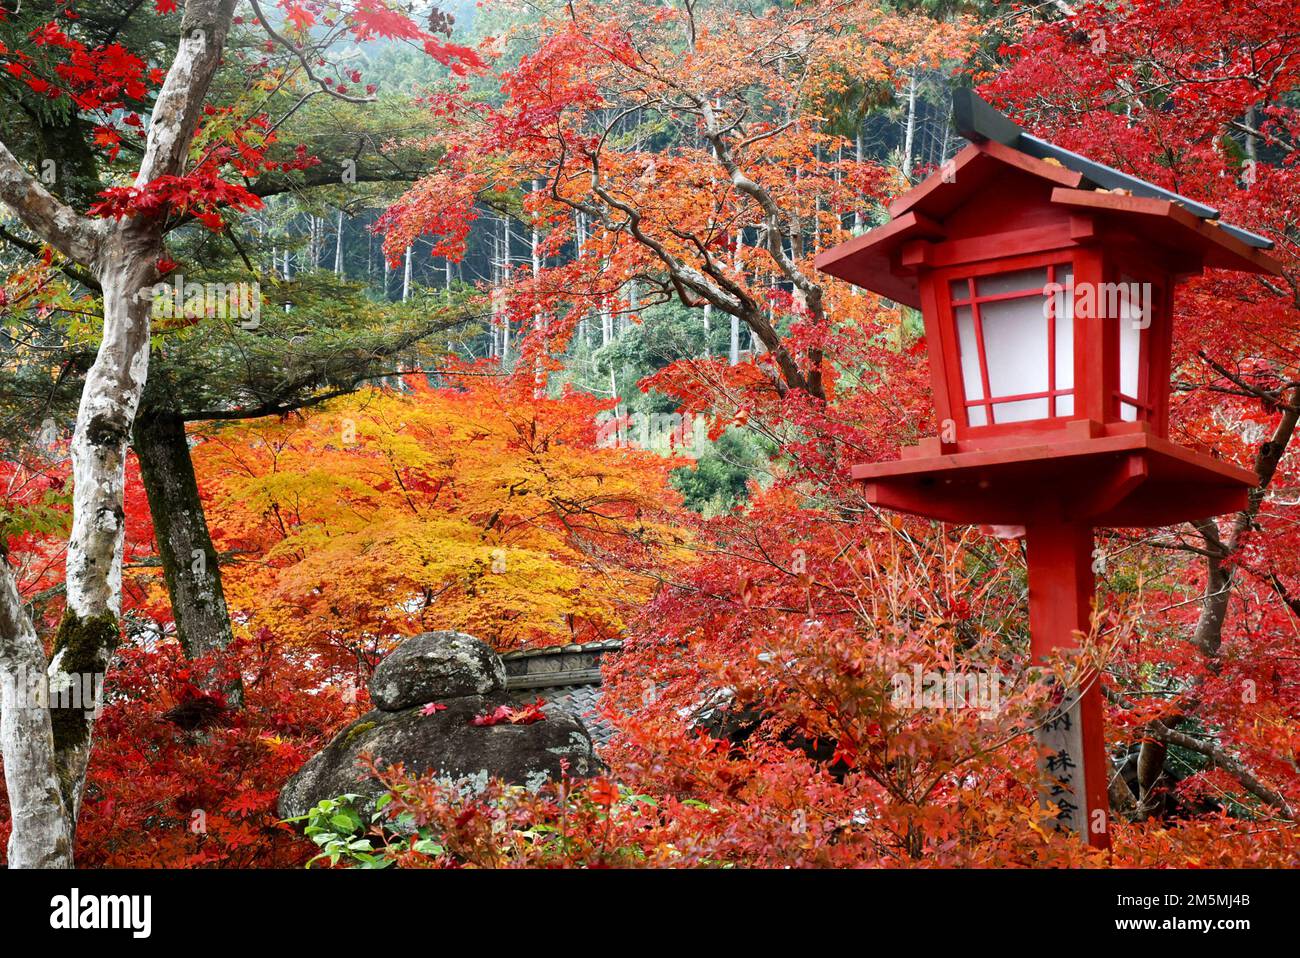 Autumn Foliage In Japan Colorful Japanese Maple Leaves During Momiji Season Around Kuwayama Shrine In Kyoto Red Wooden Lantern Stock Photo Alamy